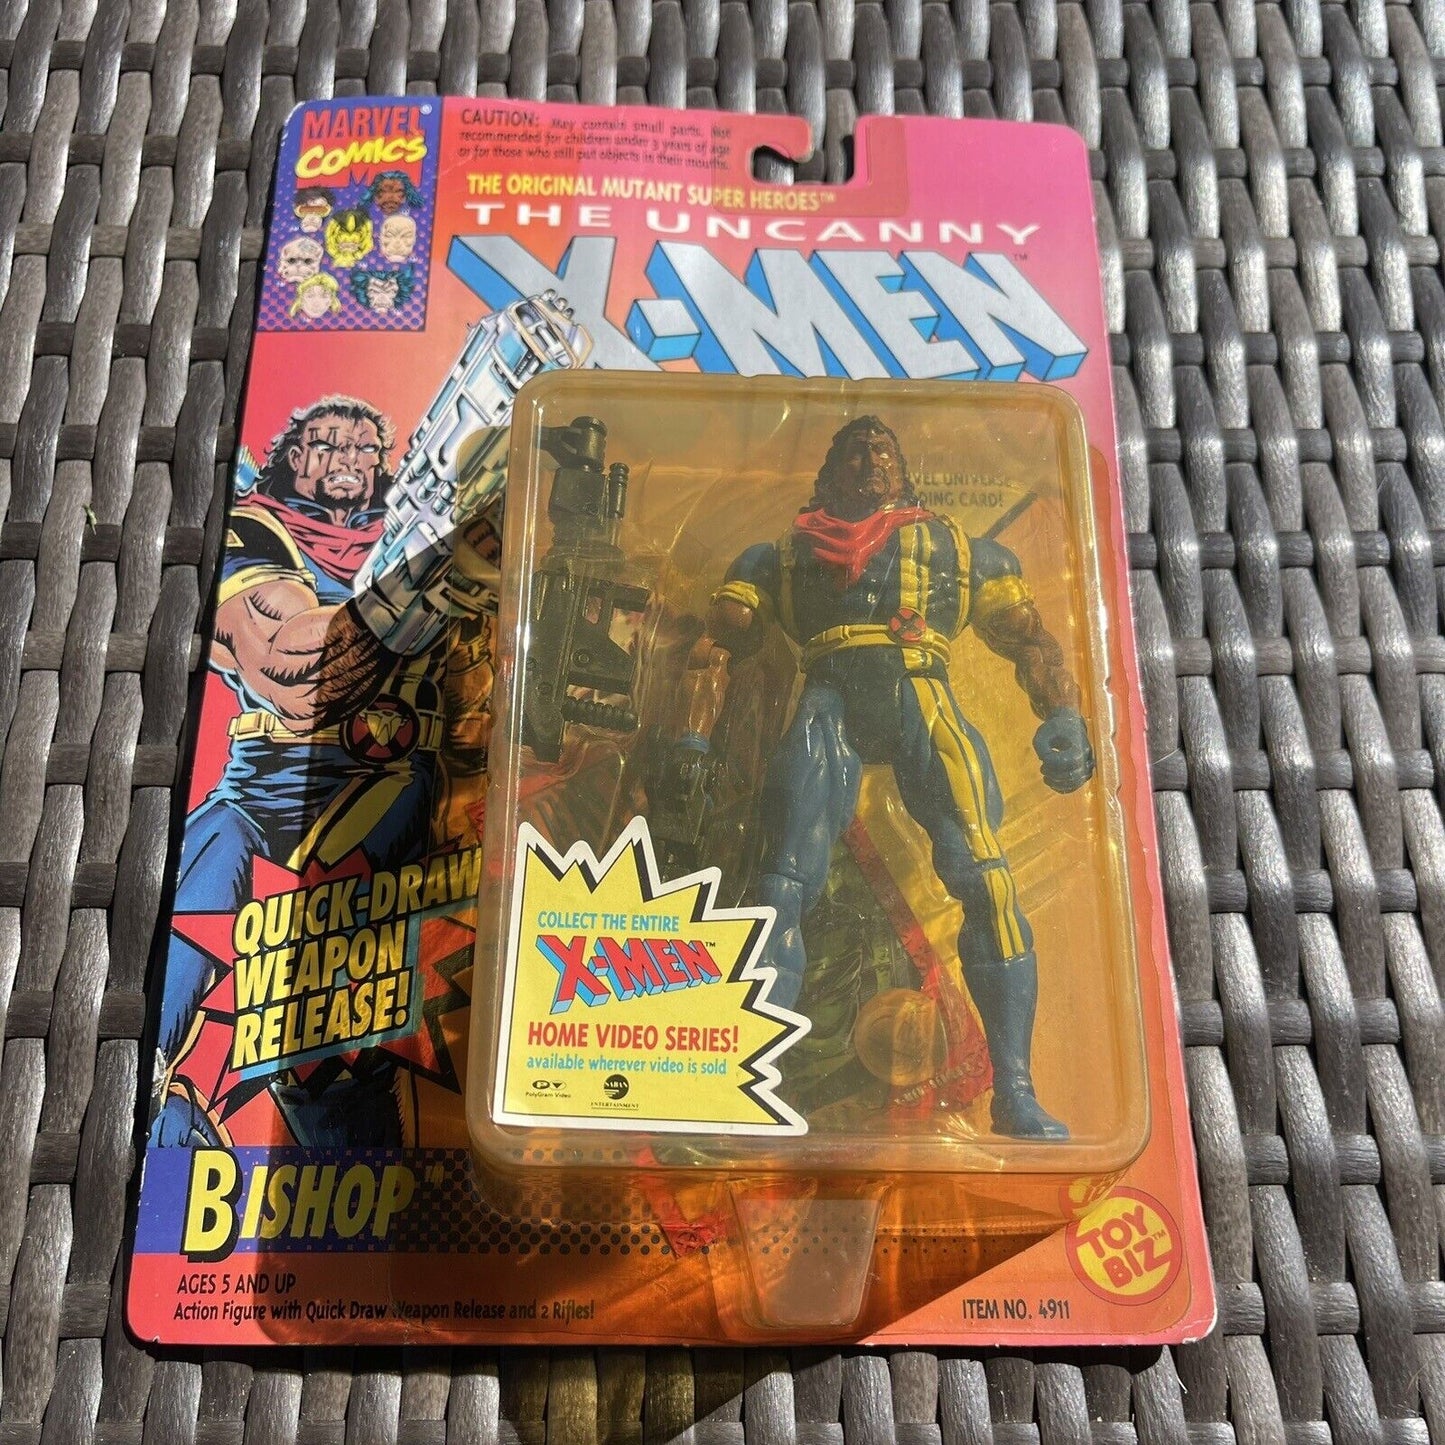 The Uncanny X-Men - Bishop - Quick-draw Weapon Release - Toy Biz 1993